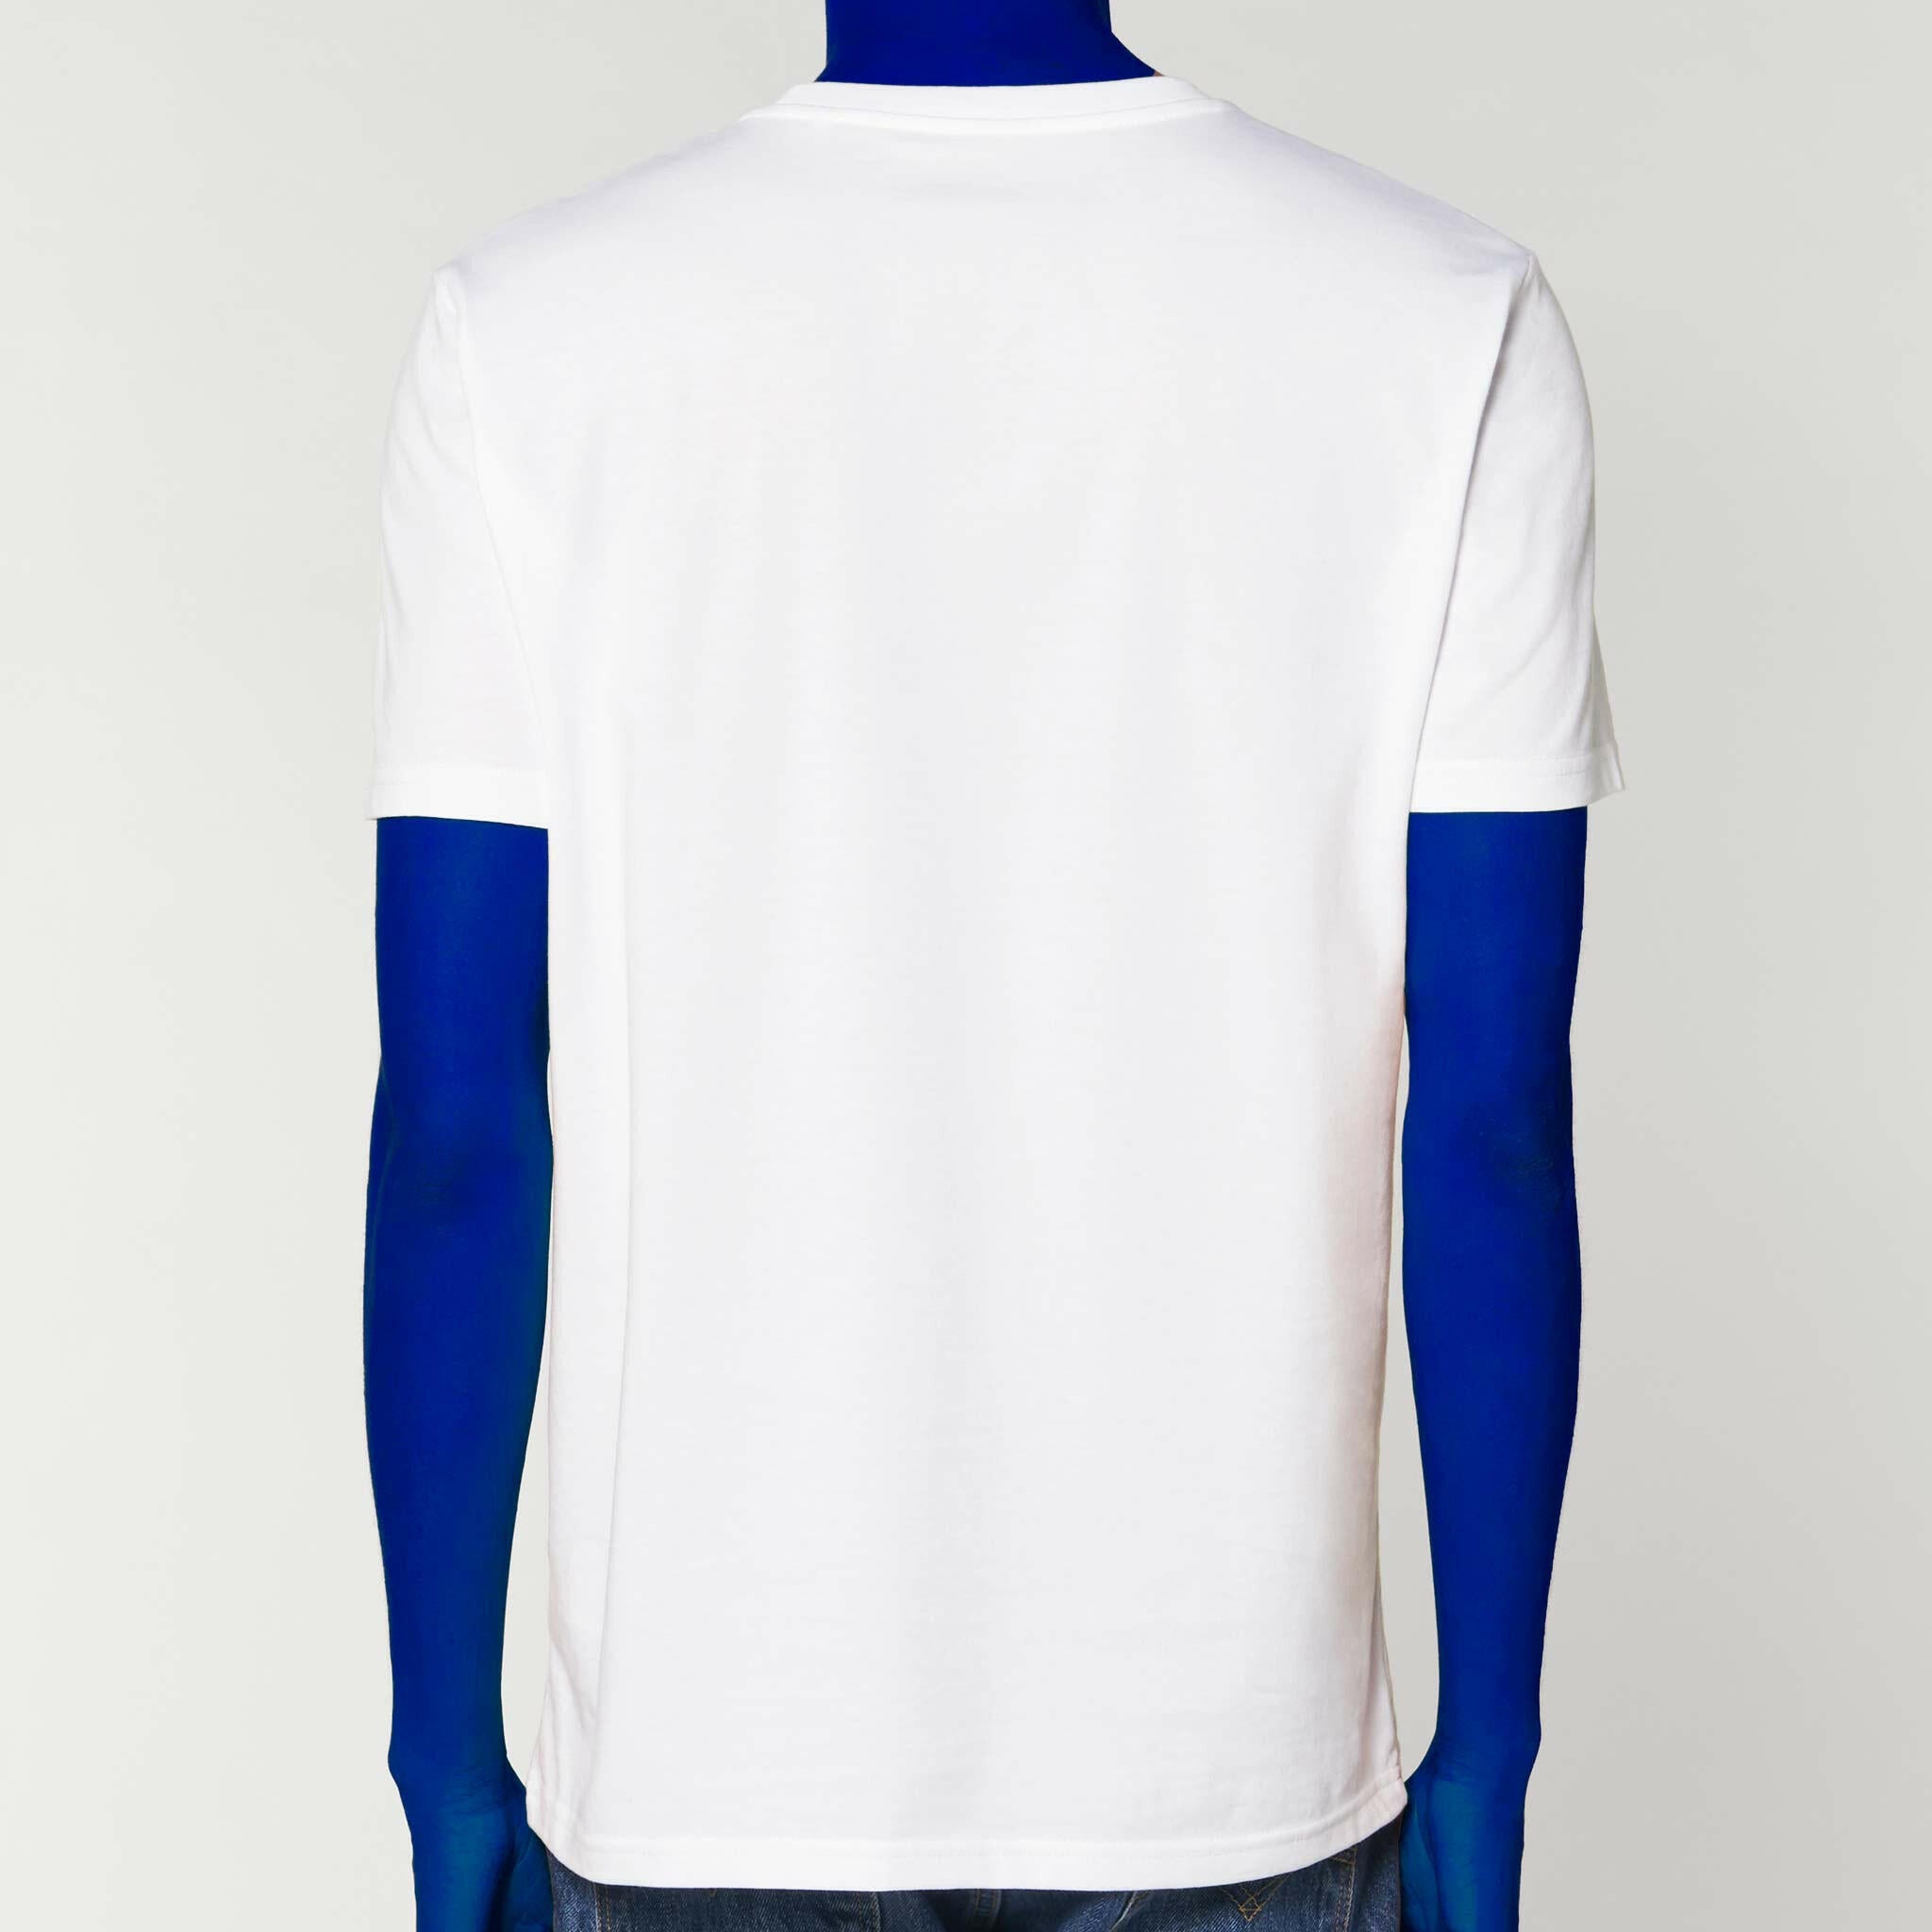 White Organic Cotton Spaceship T-shirt UZTZU® - UZTZU | The Original 4 in 1 T-Shirt